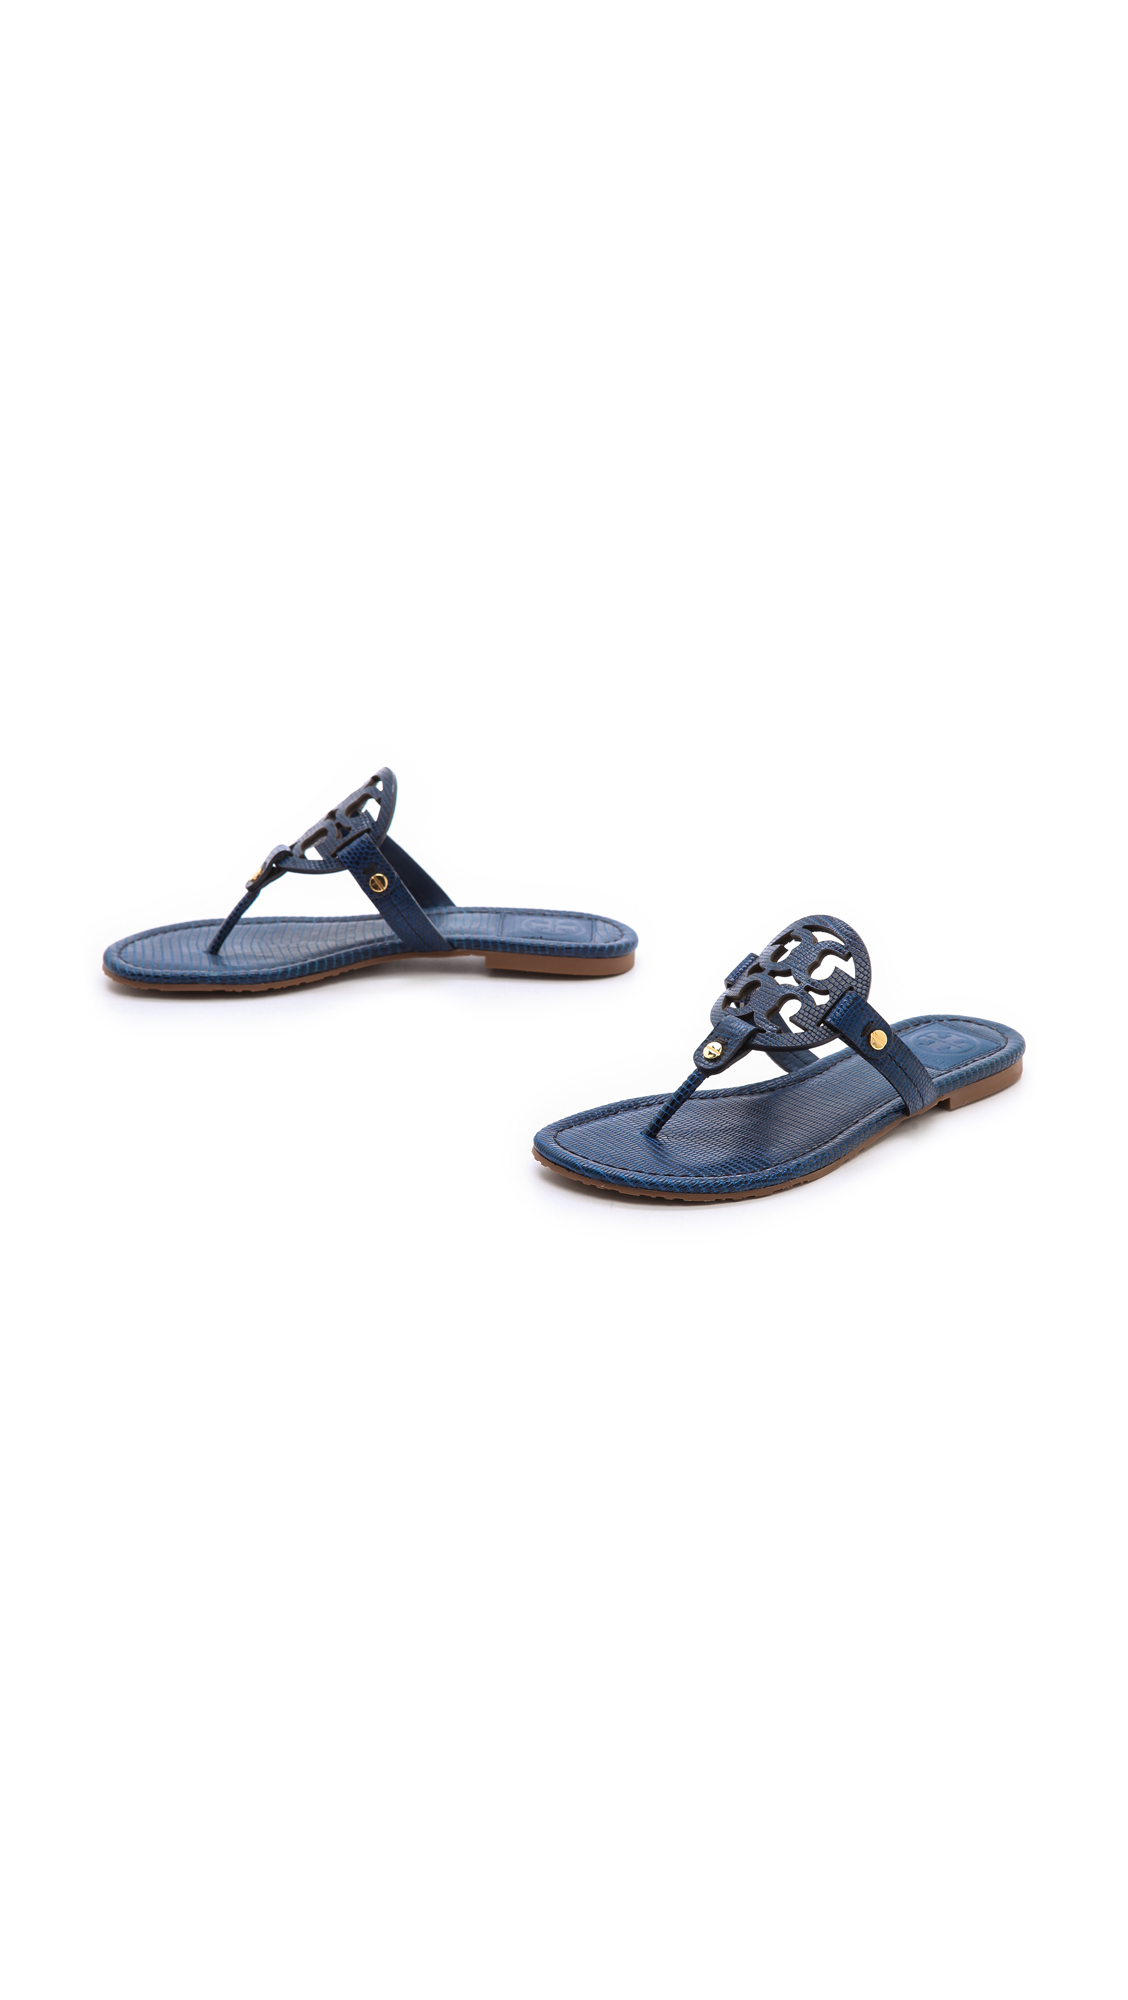 Top 37+ imagen dark blue tory burch sandals